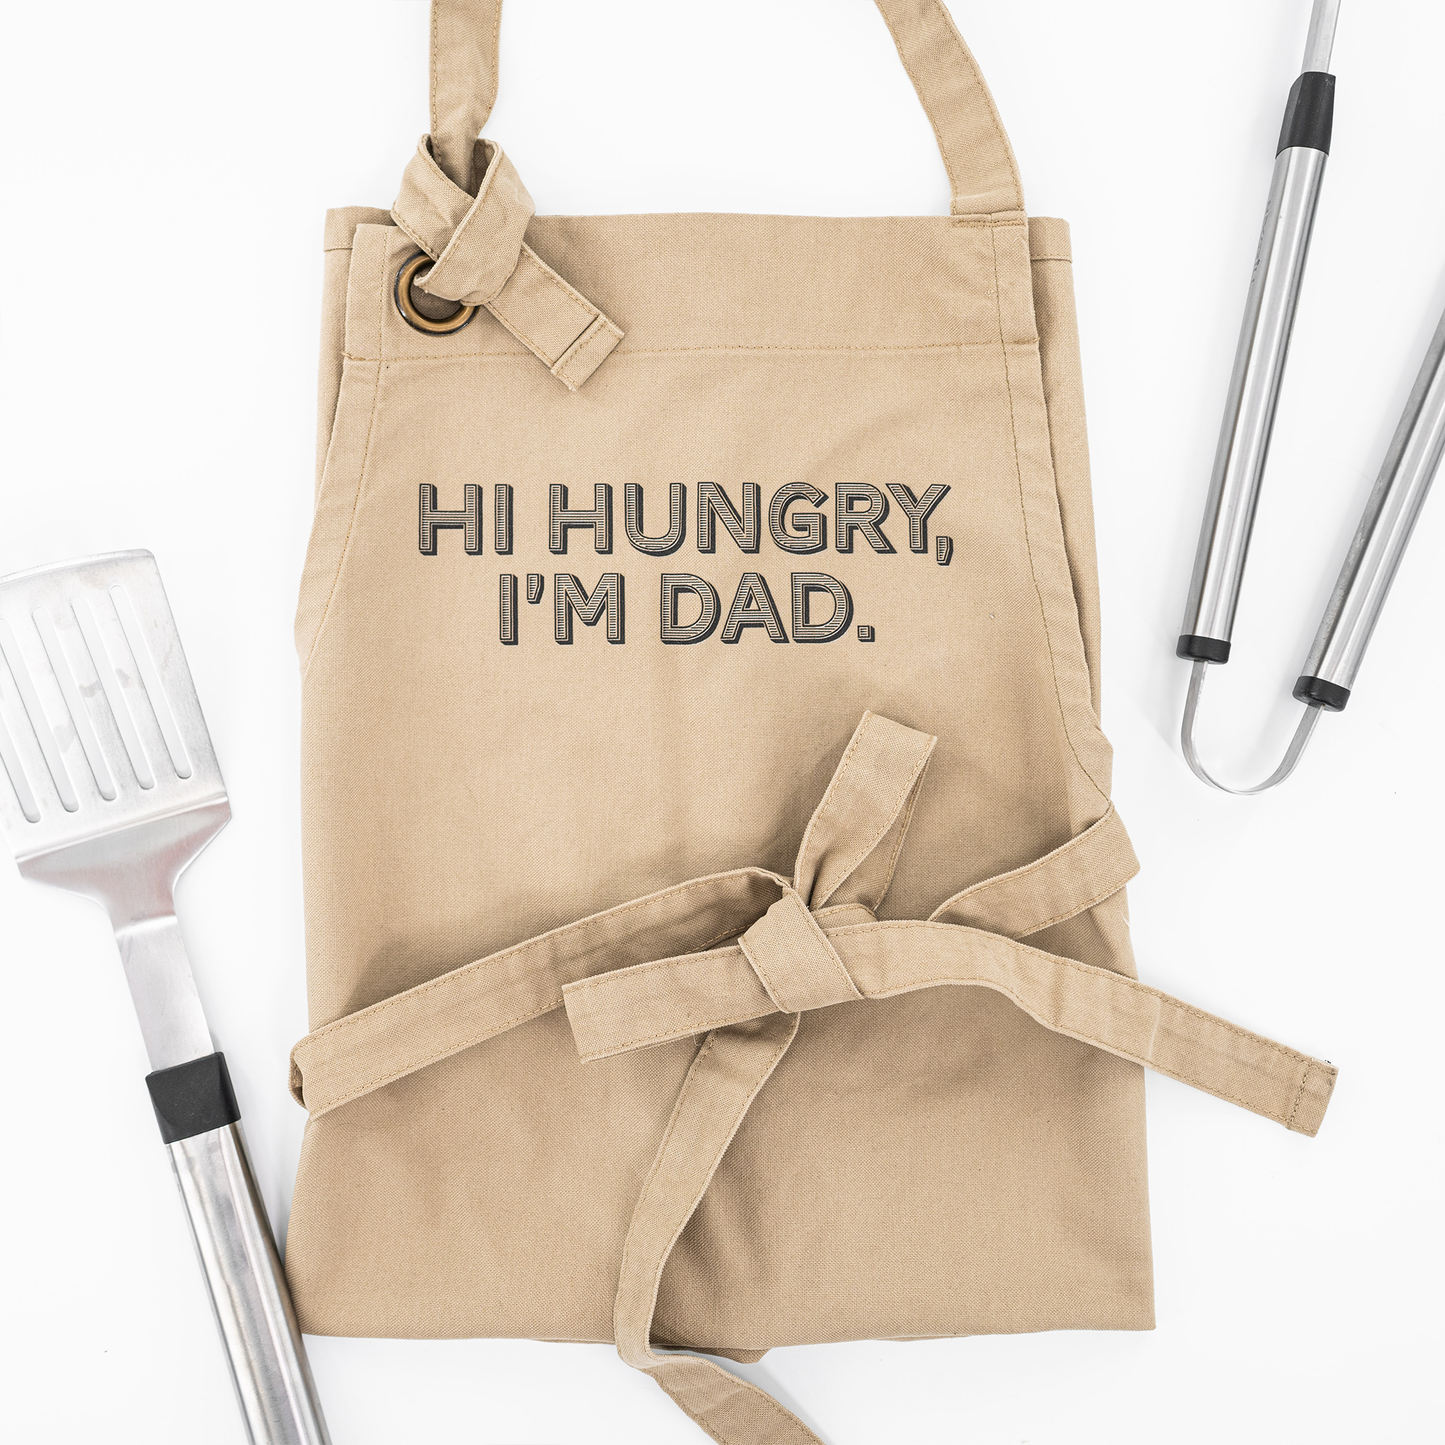 Hi Hungry, I'm Dad - Apron (Khaki)